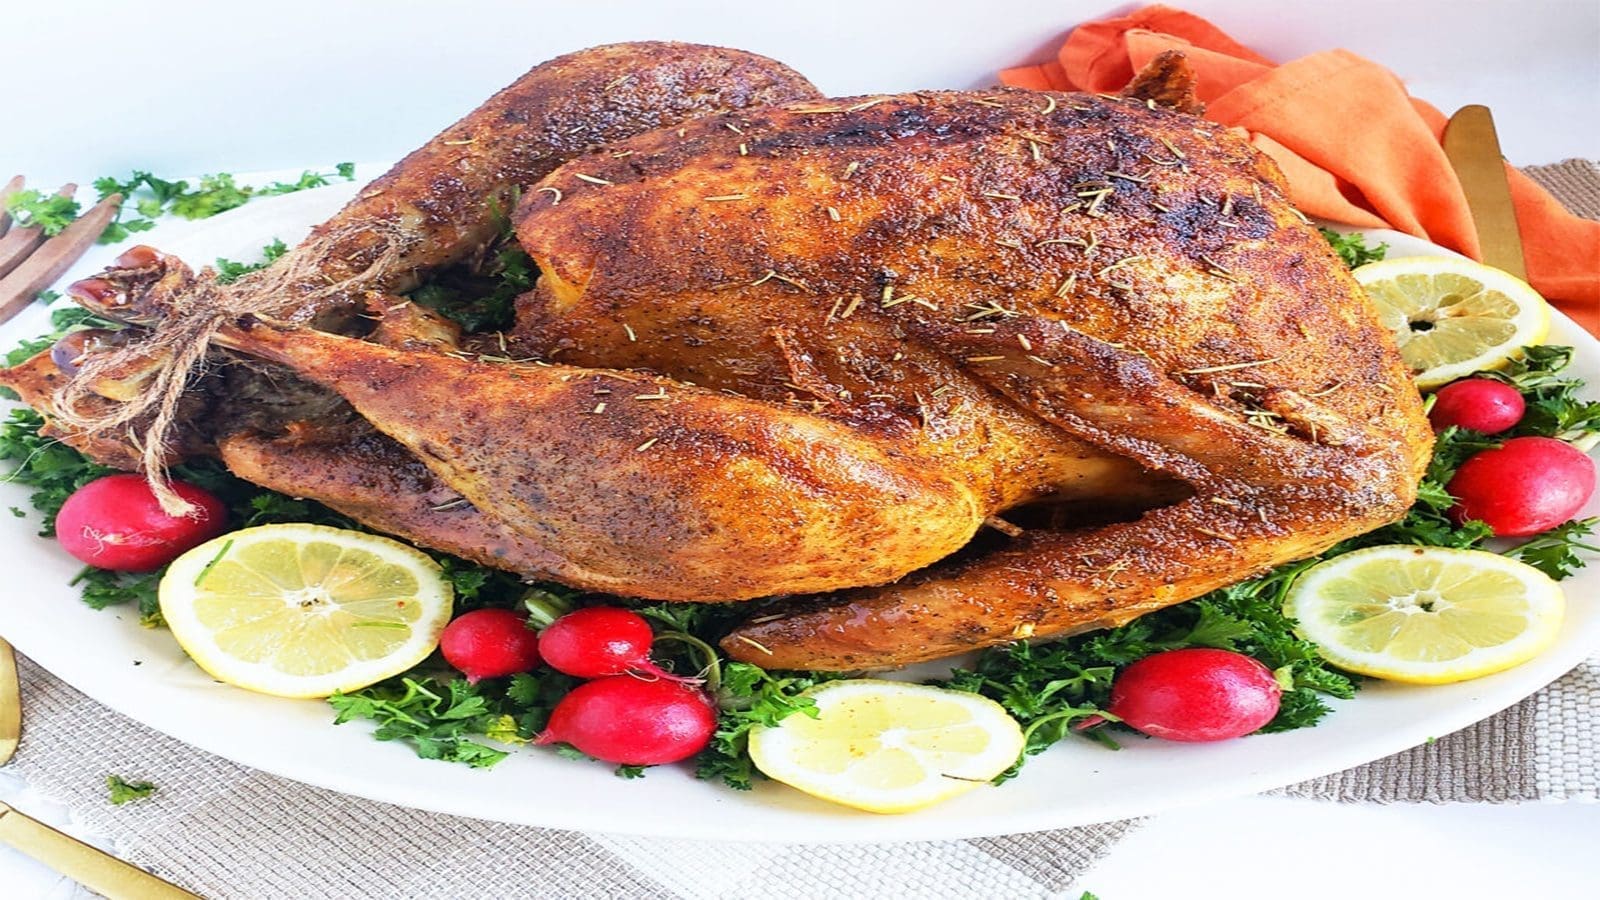 USDA funds Kansas State University researchers to control Salmonella in turkey